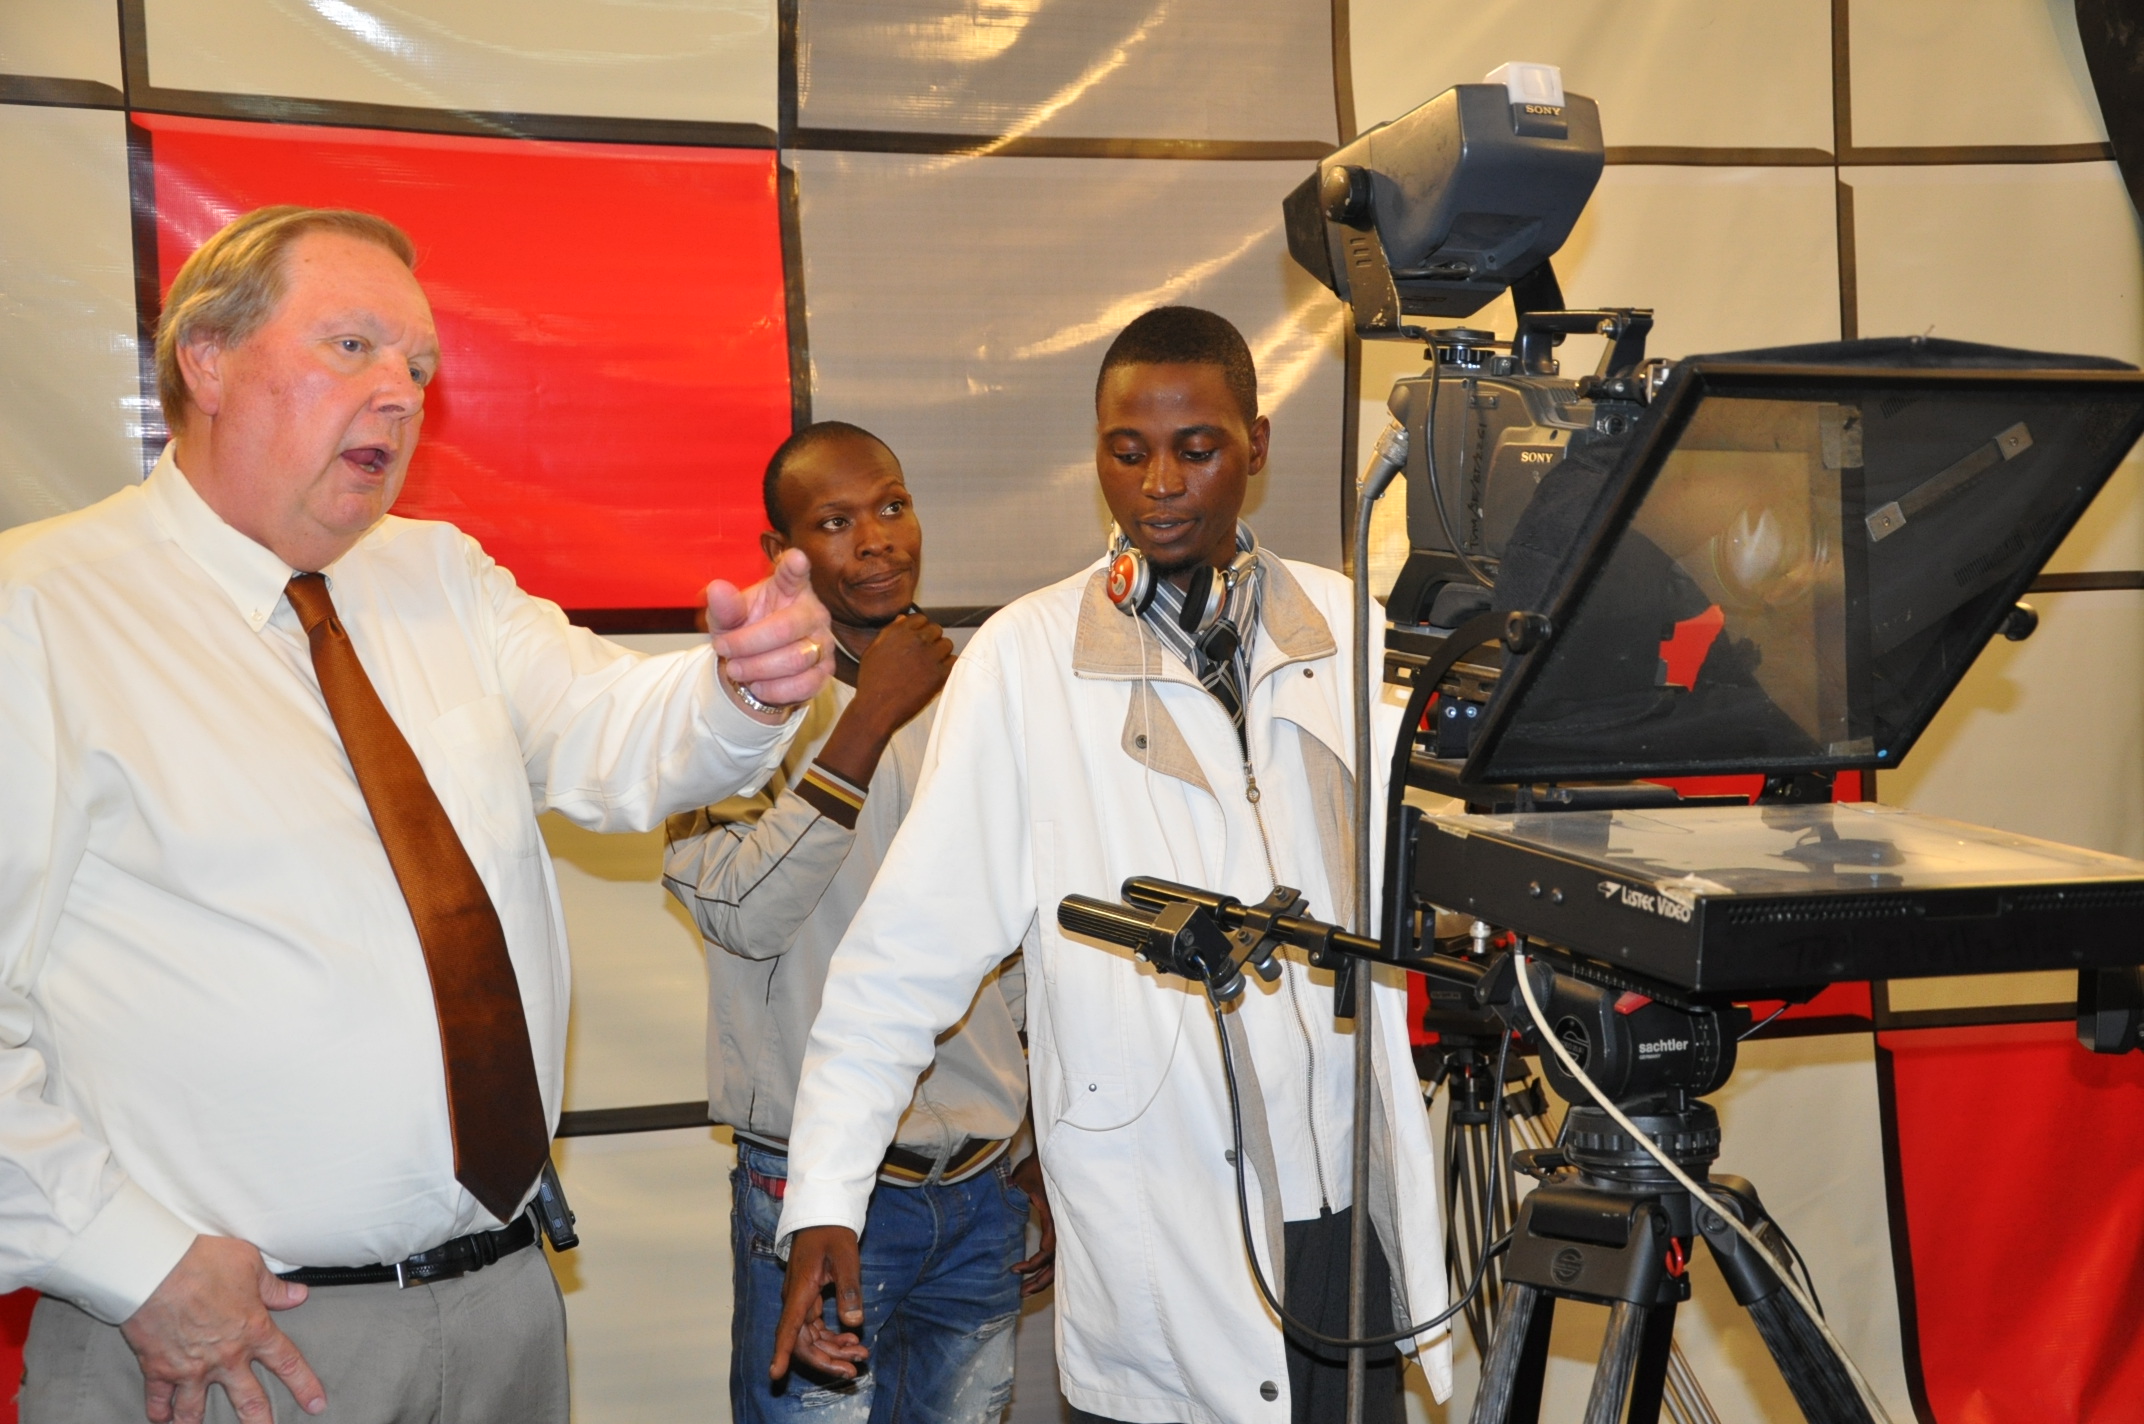 BBG Completes Media Training in Malawi